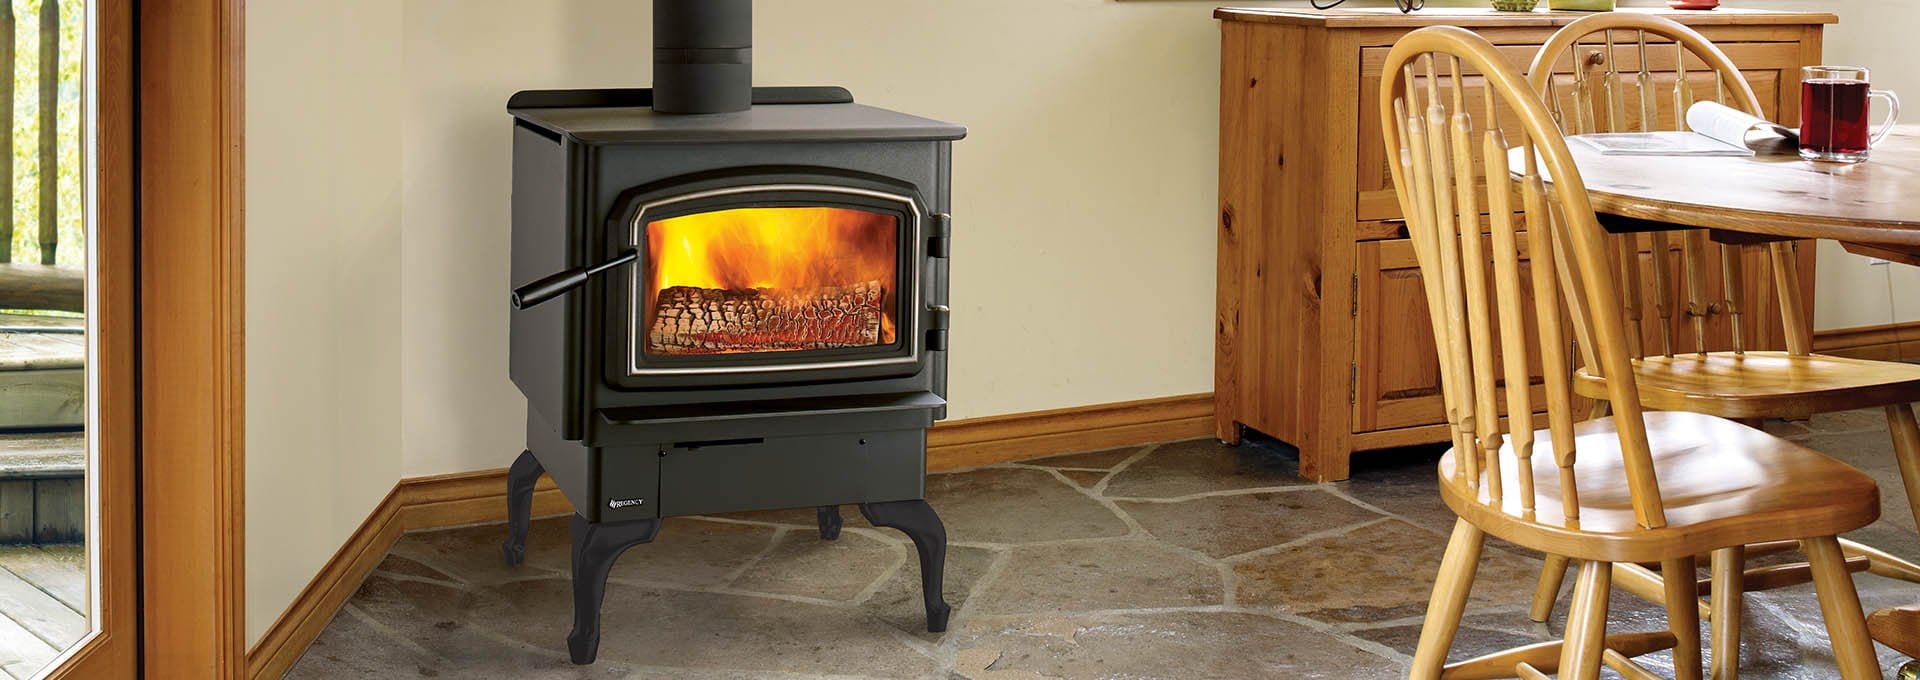 Regency Regency Classic F2450 Wood Stove F2450M Fireplace Finished - Wood